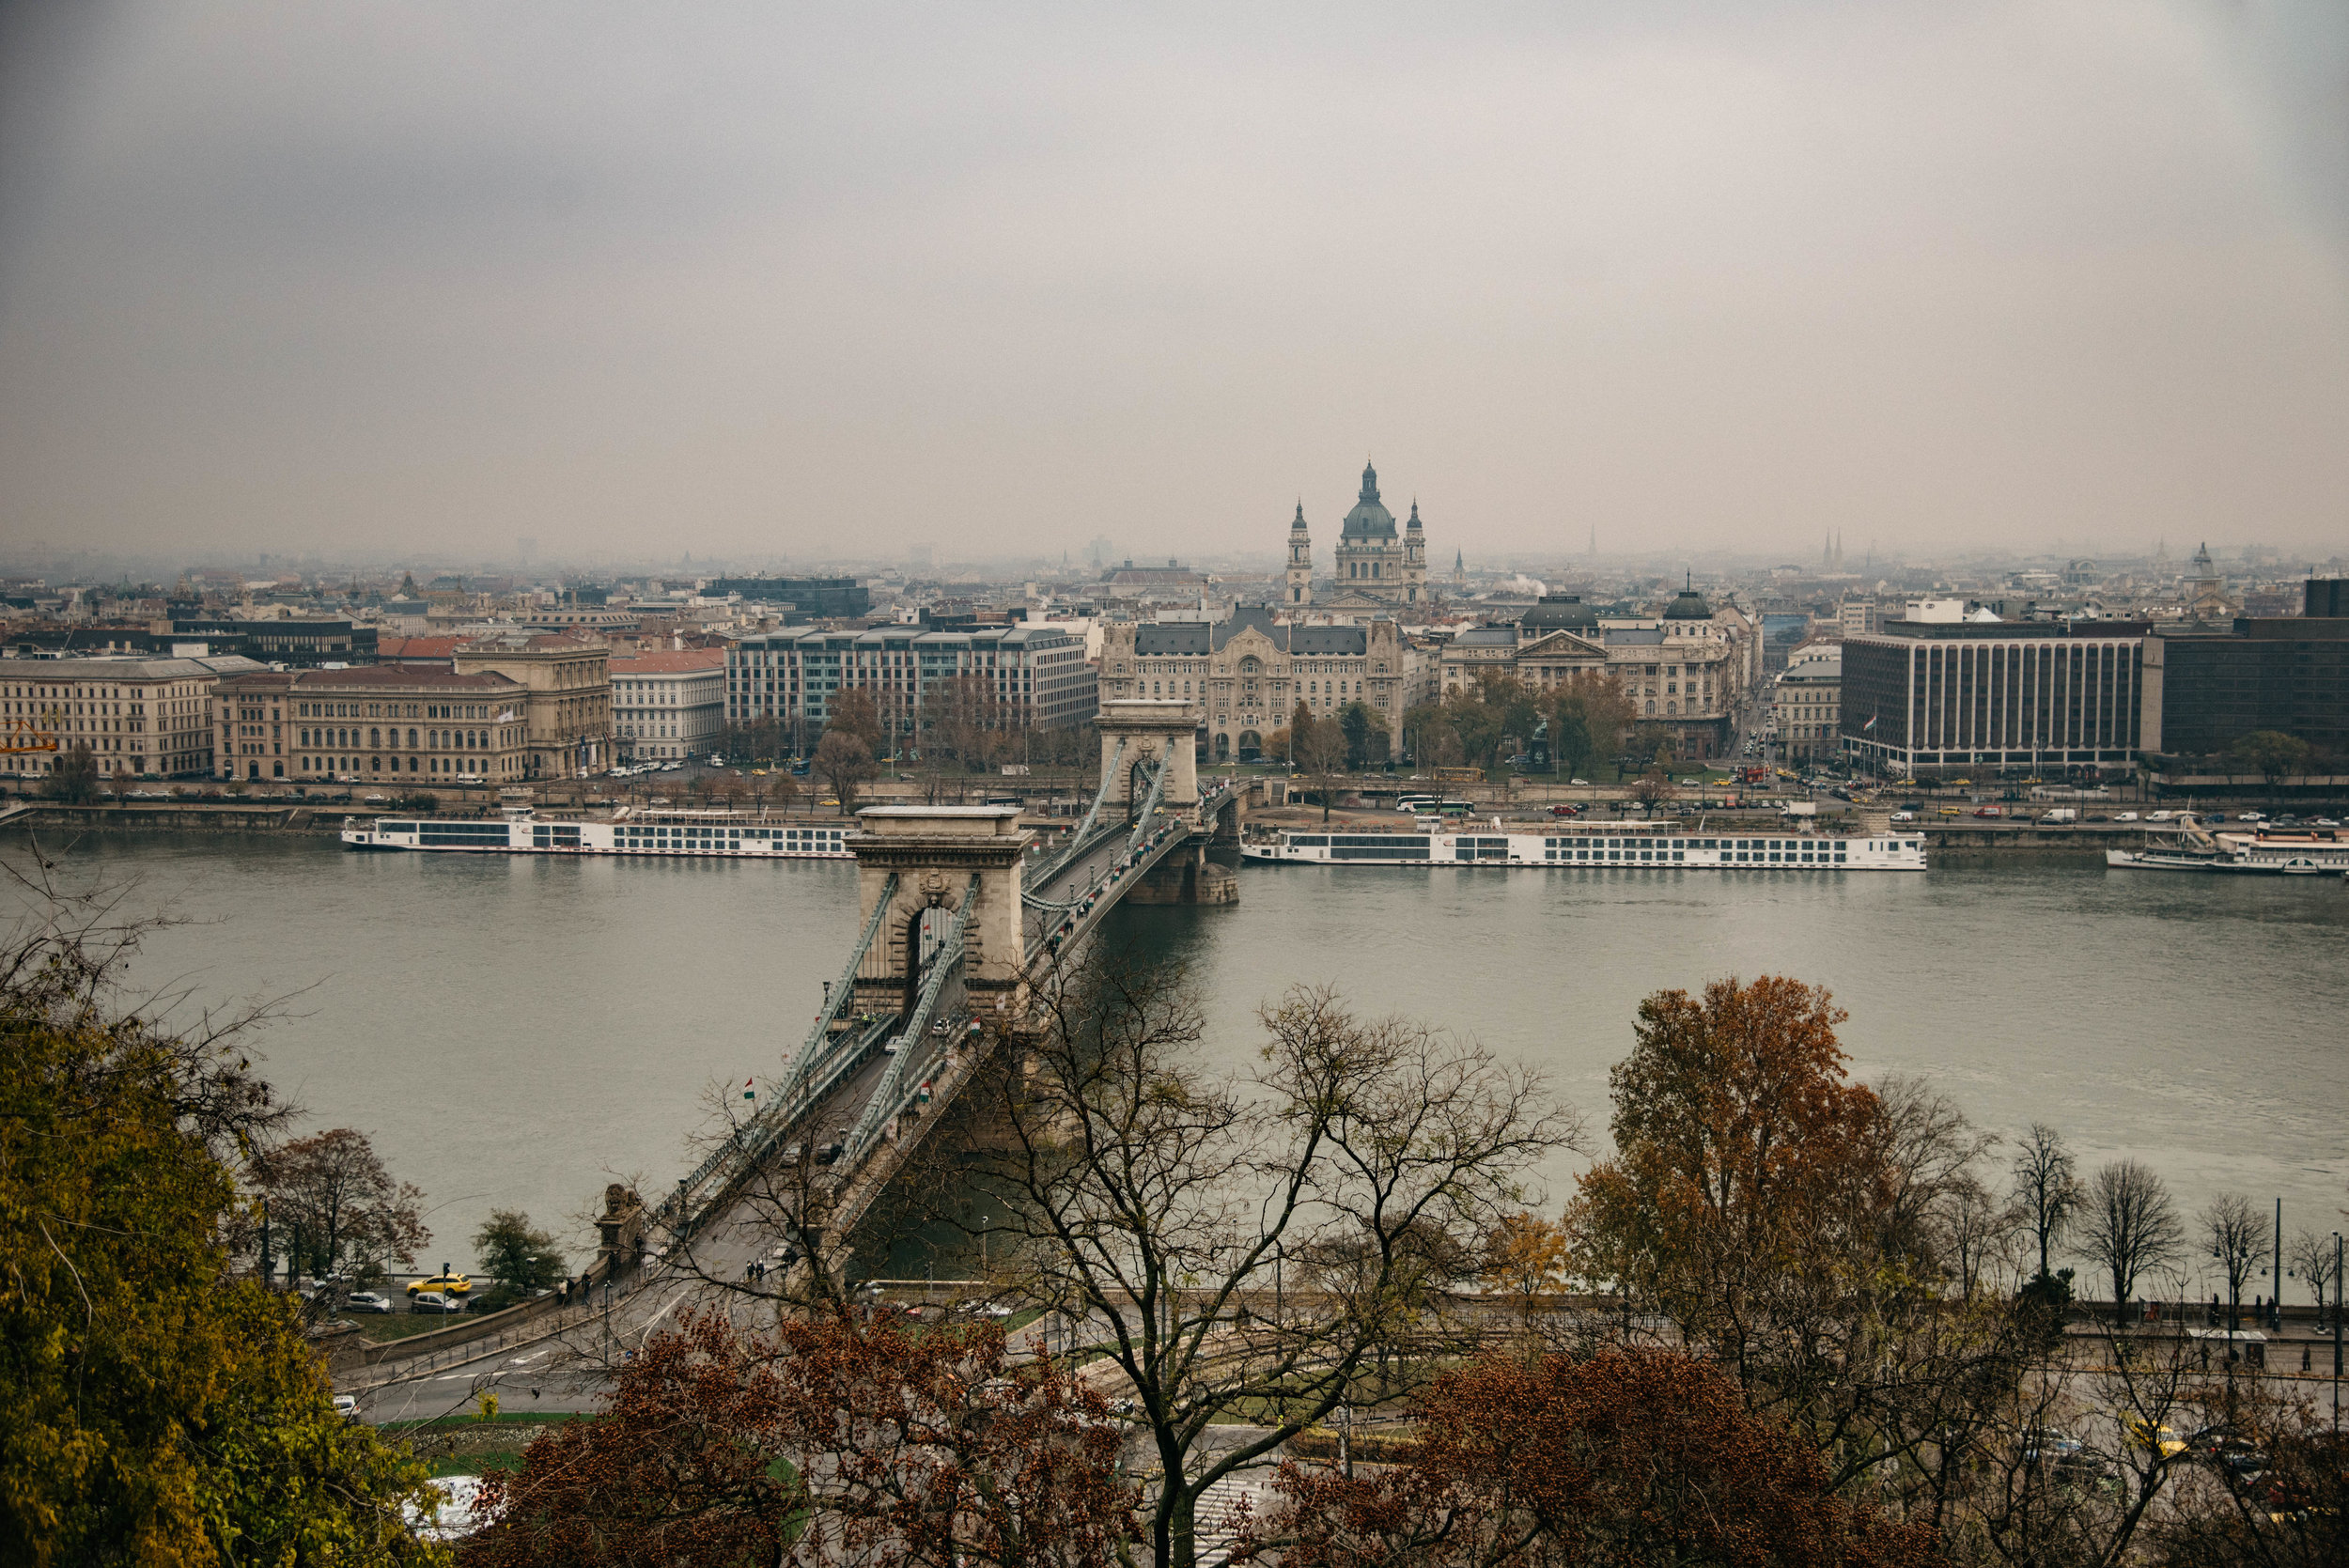 Széchenyi Bridge and Danube